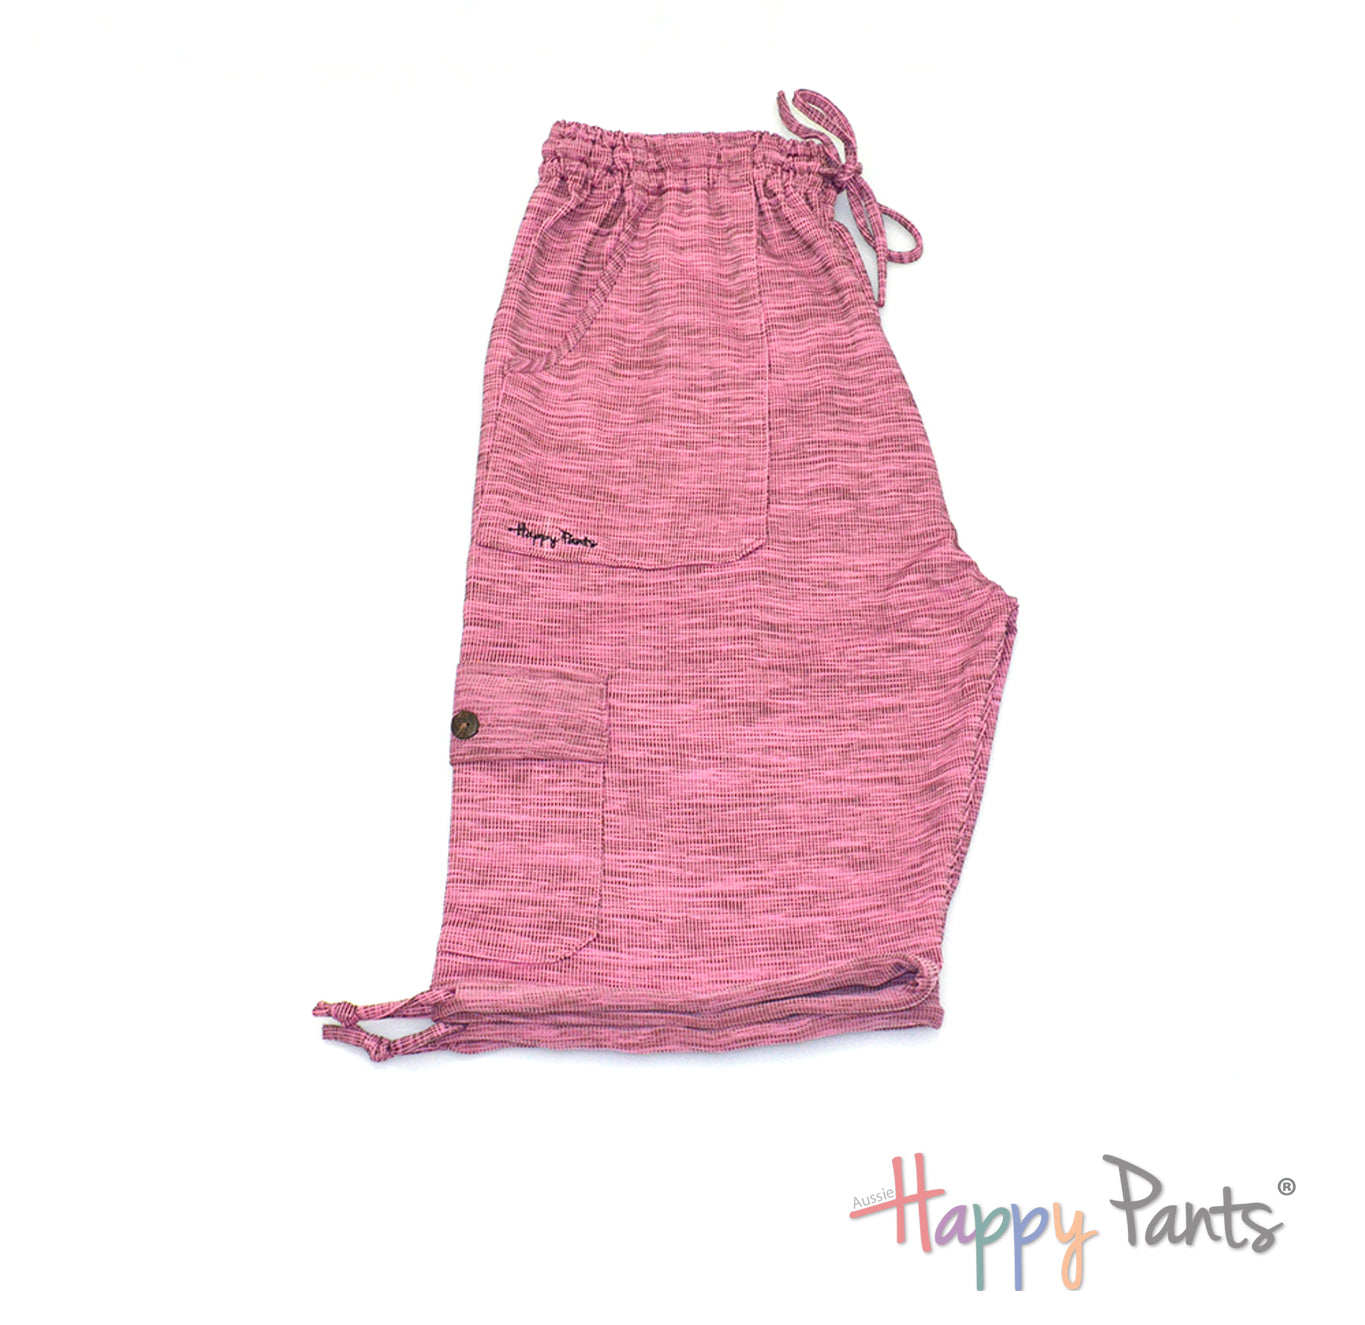 Colourful shorts for ladies cotton boardshorts comfortable plus sizes Happy Pants